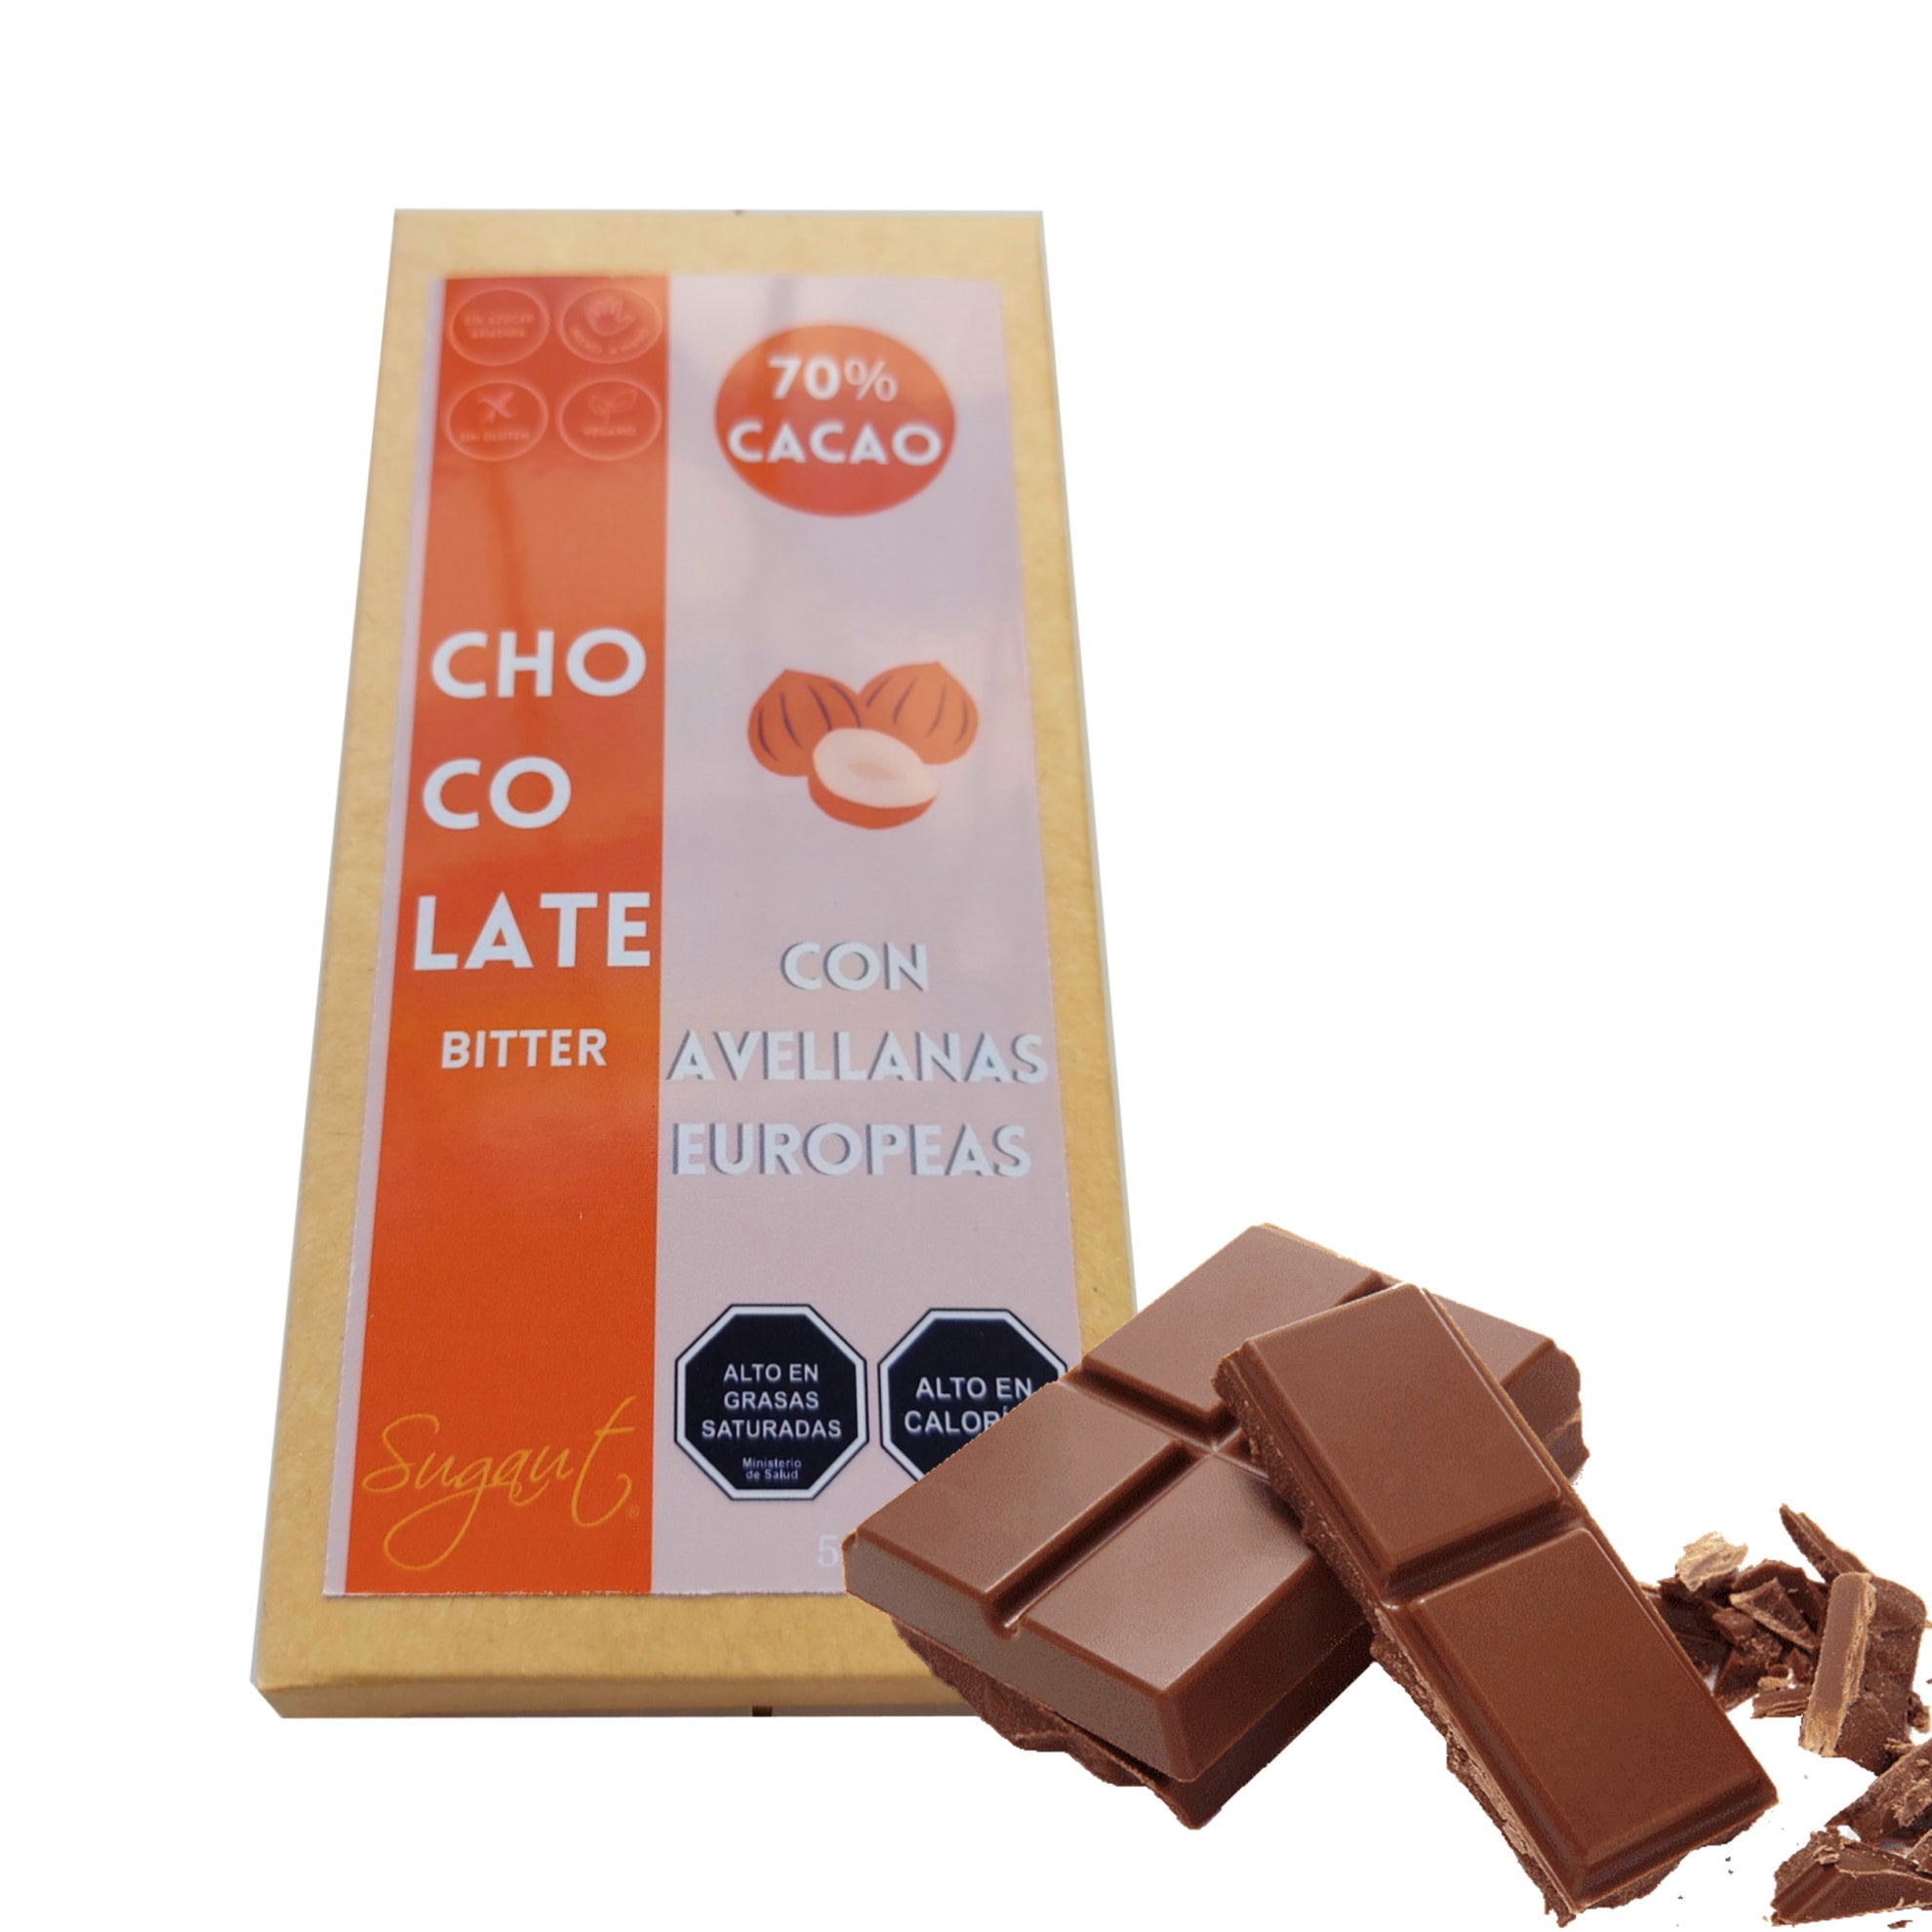 Chocolate Con Avellanas Europeas - 70% Cacao 50gr